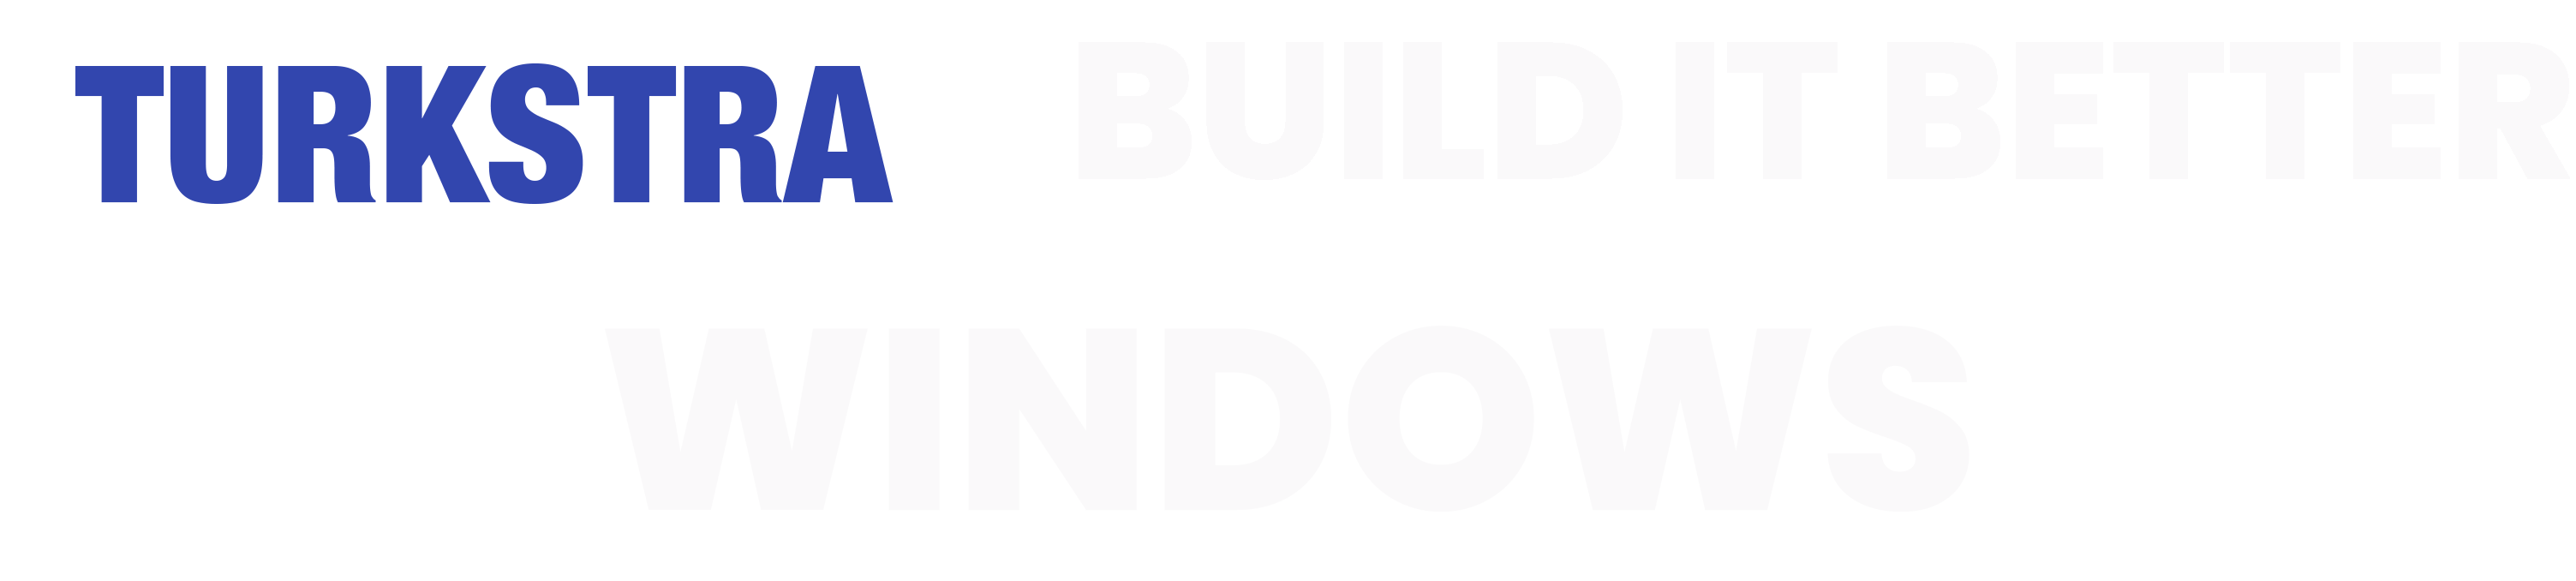 TURKSTRA Build-It-Better WINDOWS